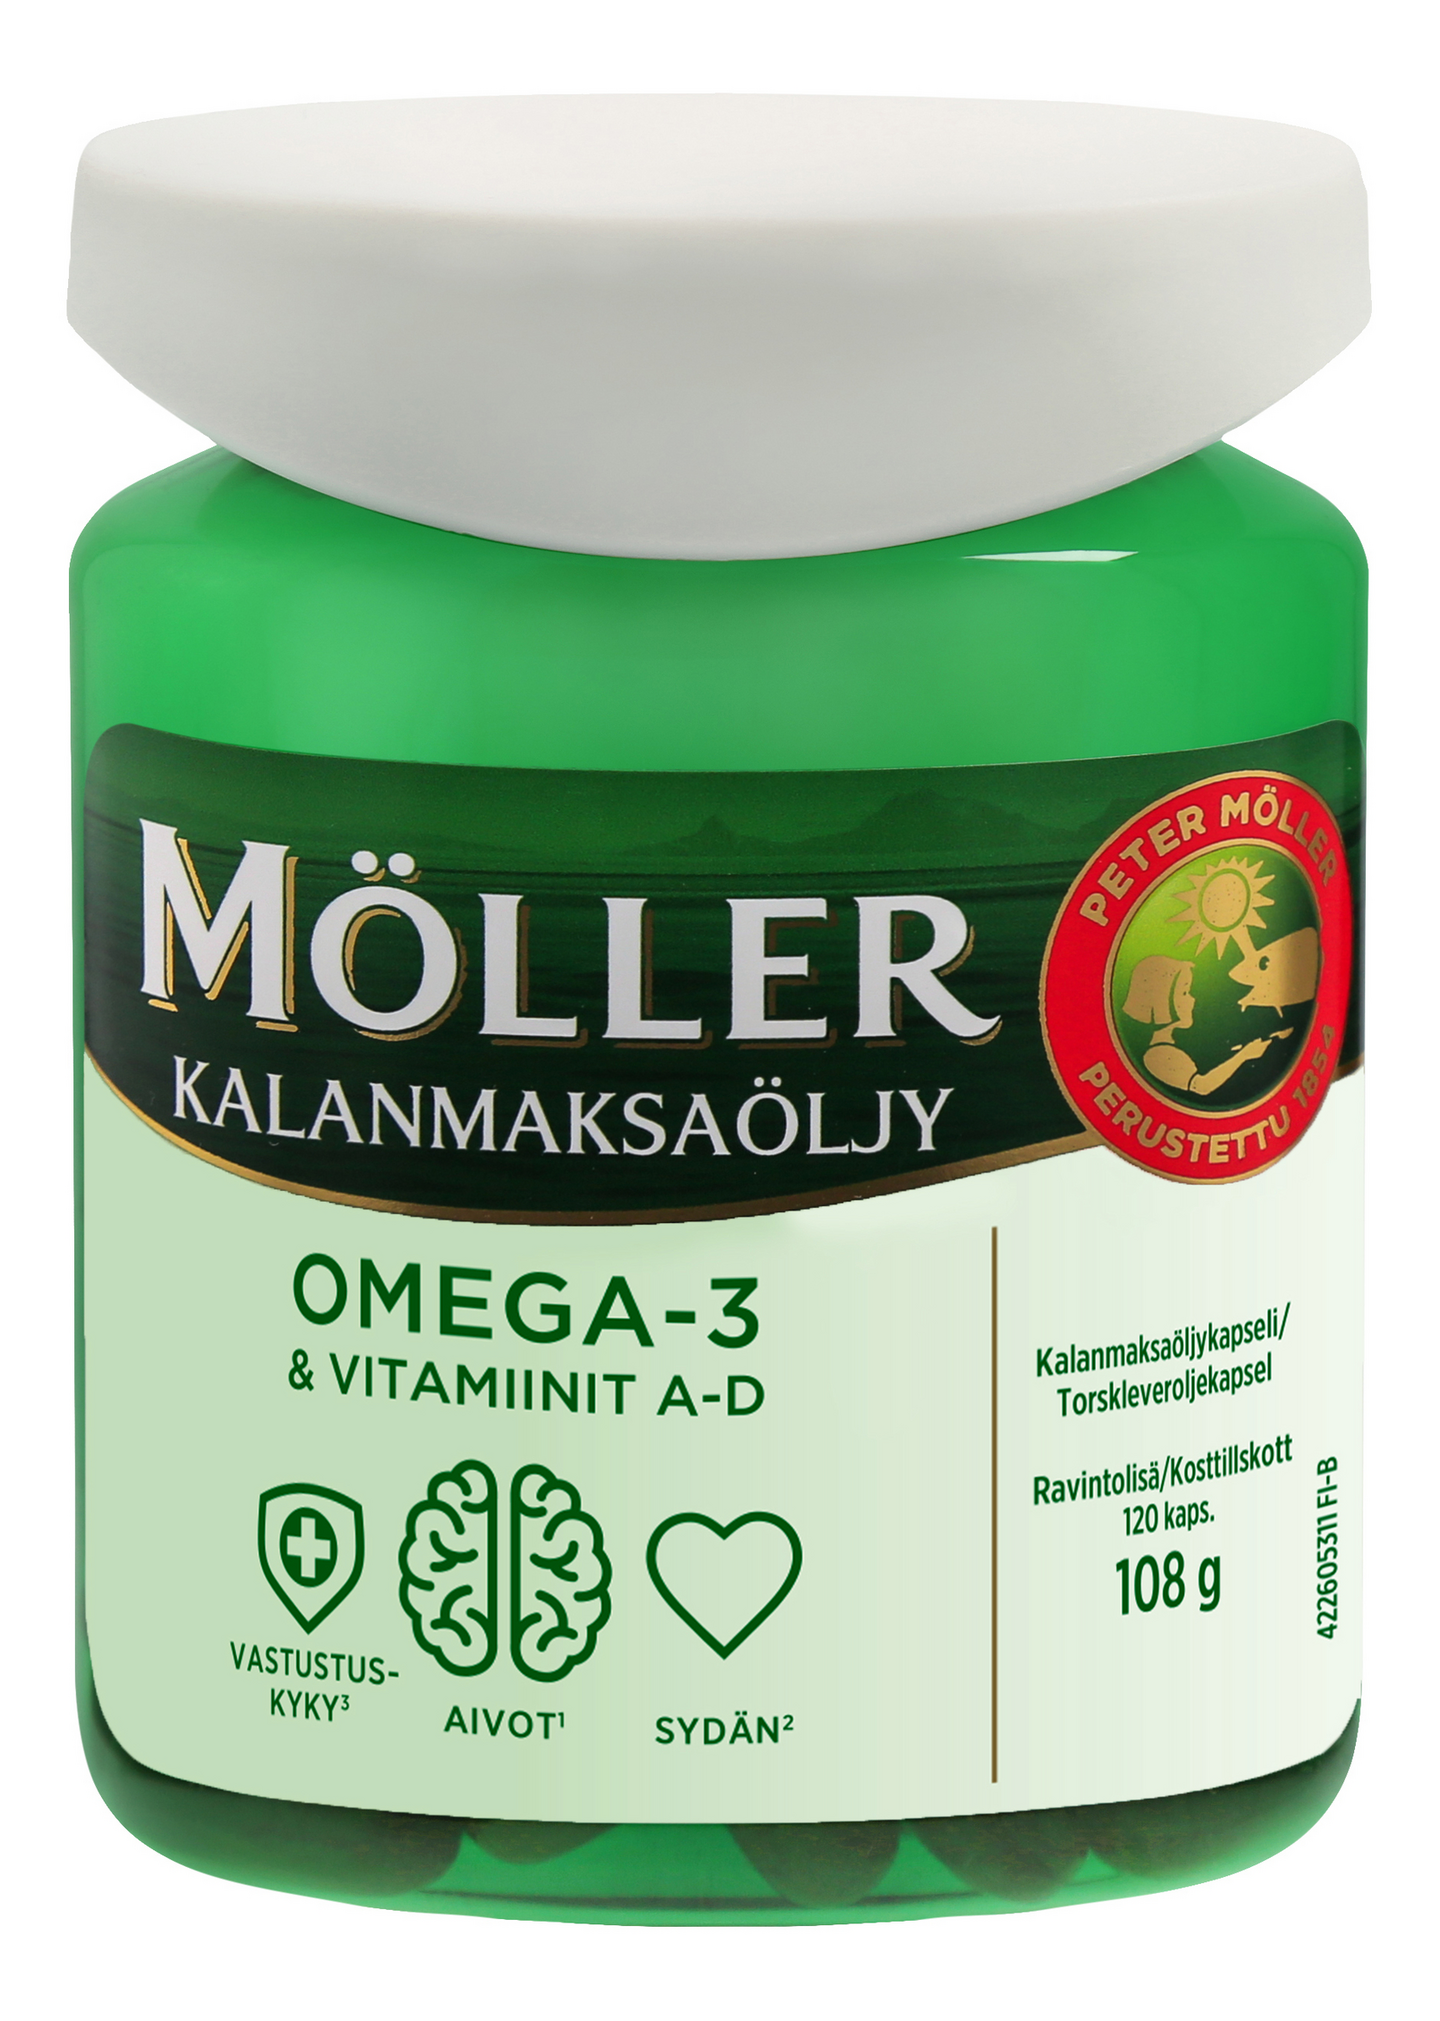 Möller omega-3 & vitamiinit A-D 108g DISPLAY